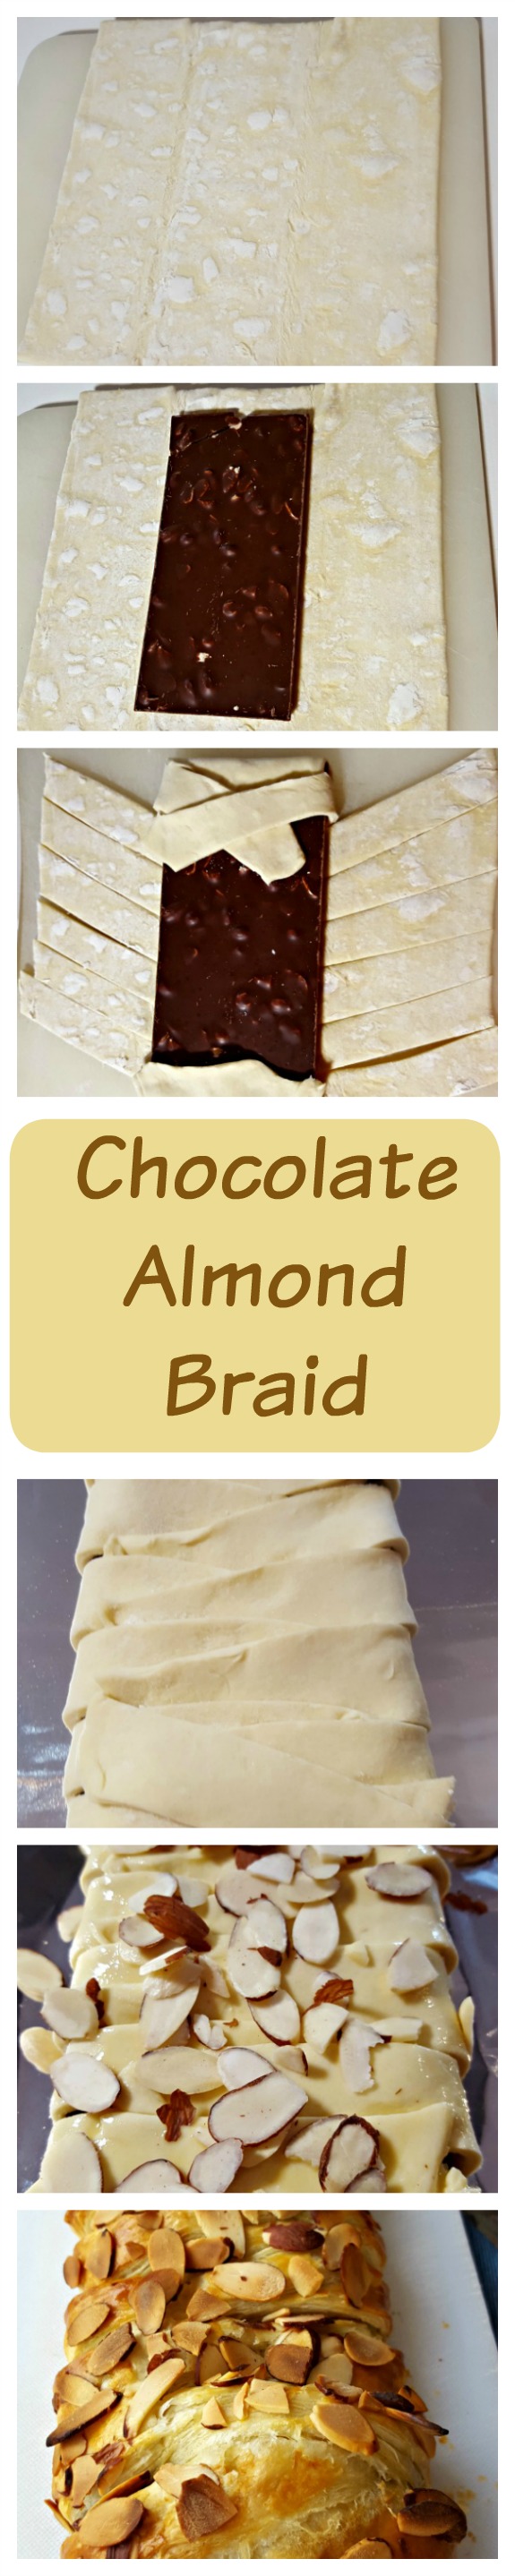 Chocolate Almond Braid